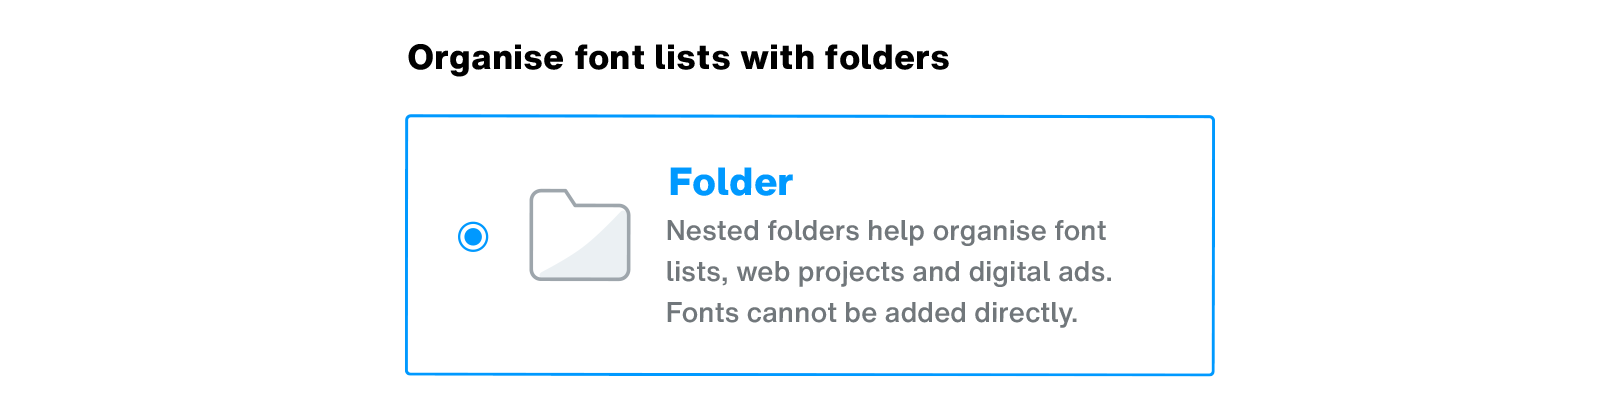 Organise list with folders 01